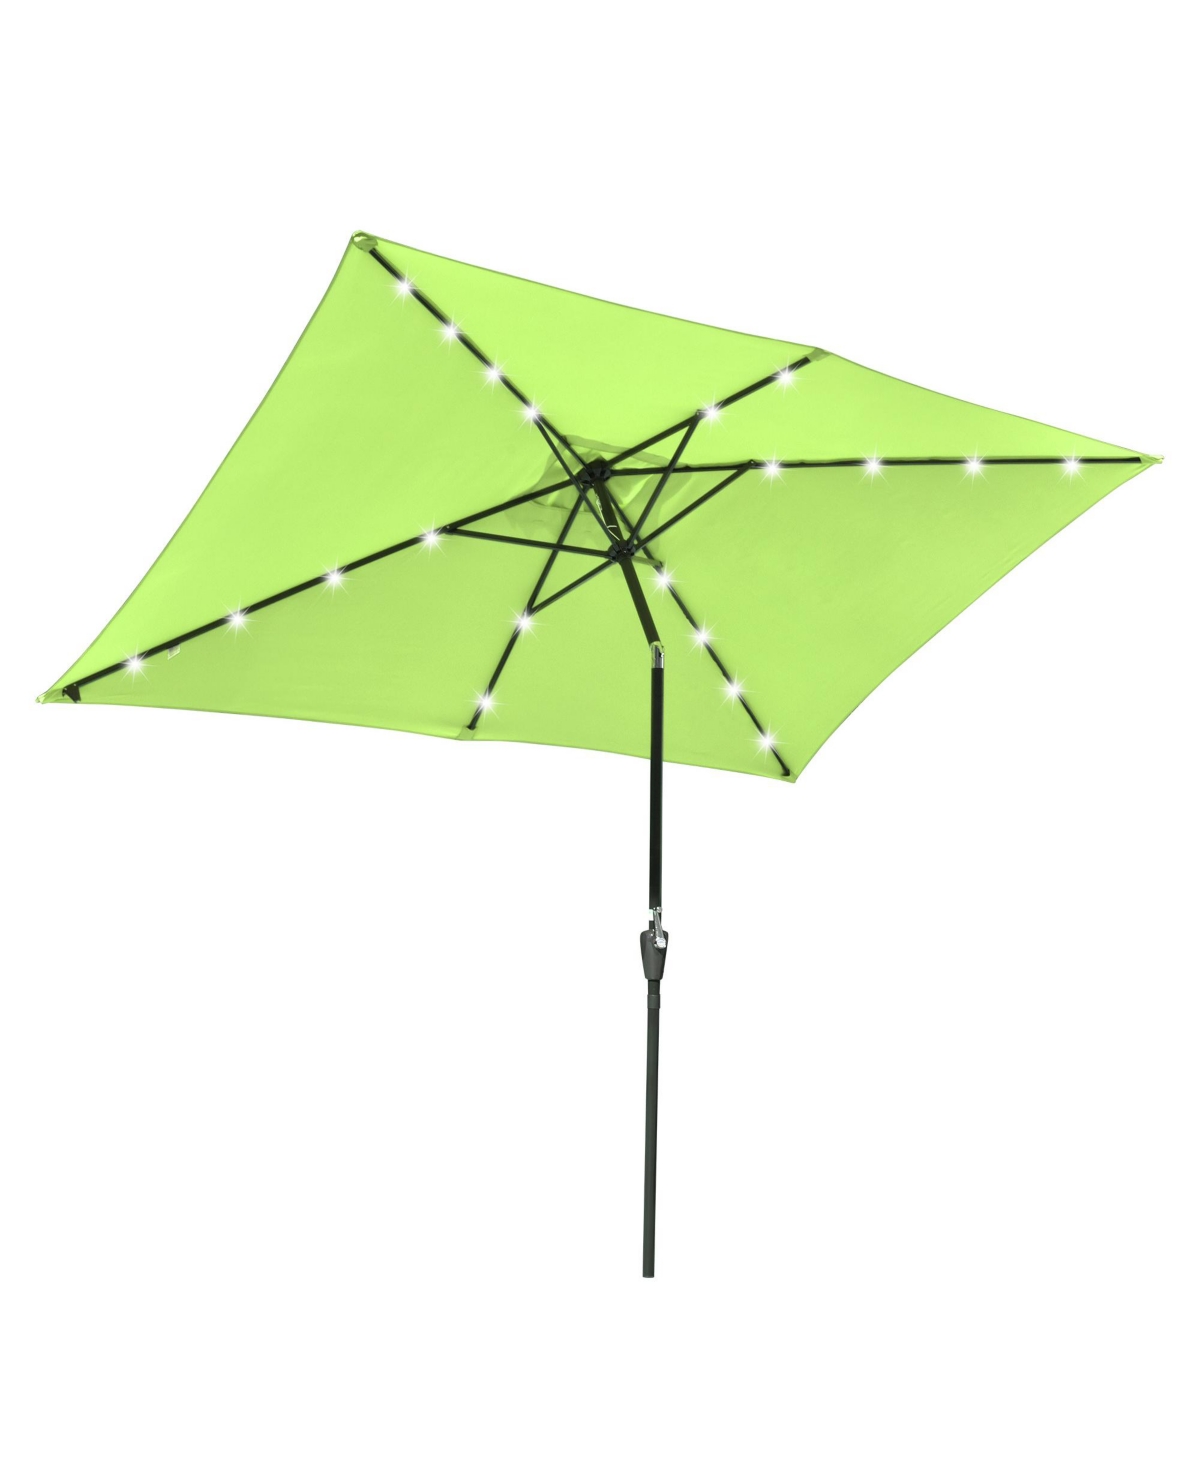 10x6' Rectangle Patio Umbrella 6 Ribs 20LEDs Solar Outdoor Tilt with Crank - Apple green